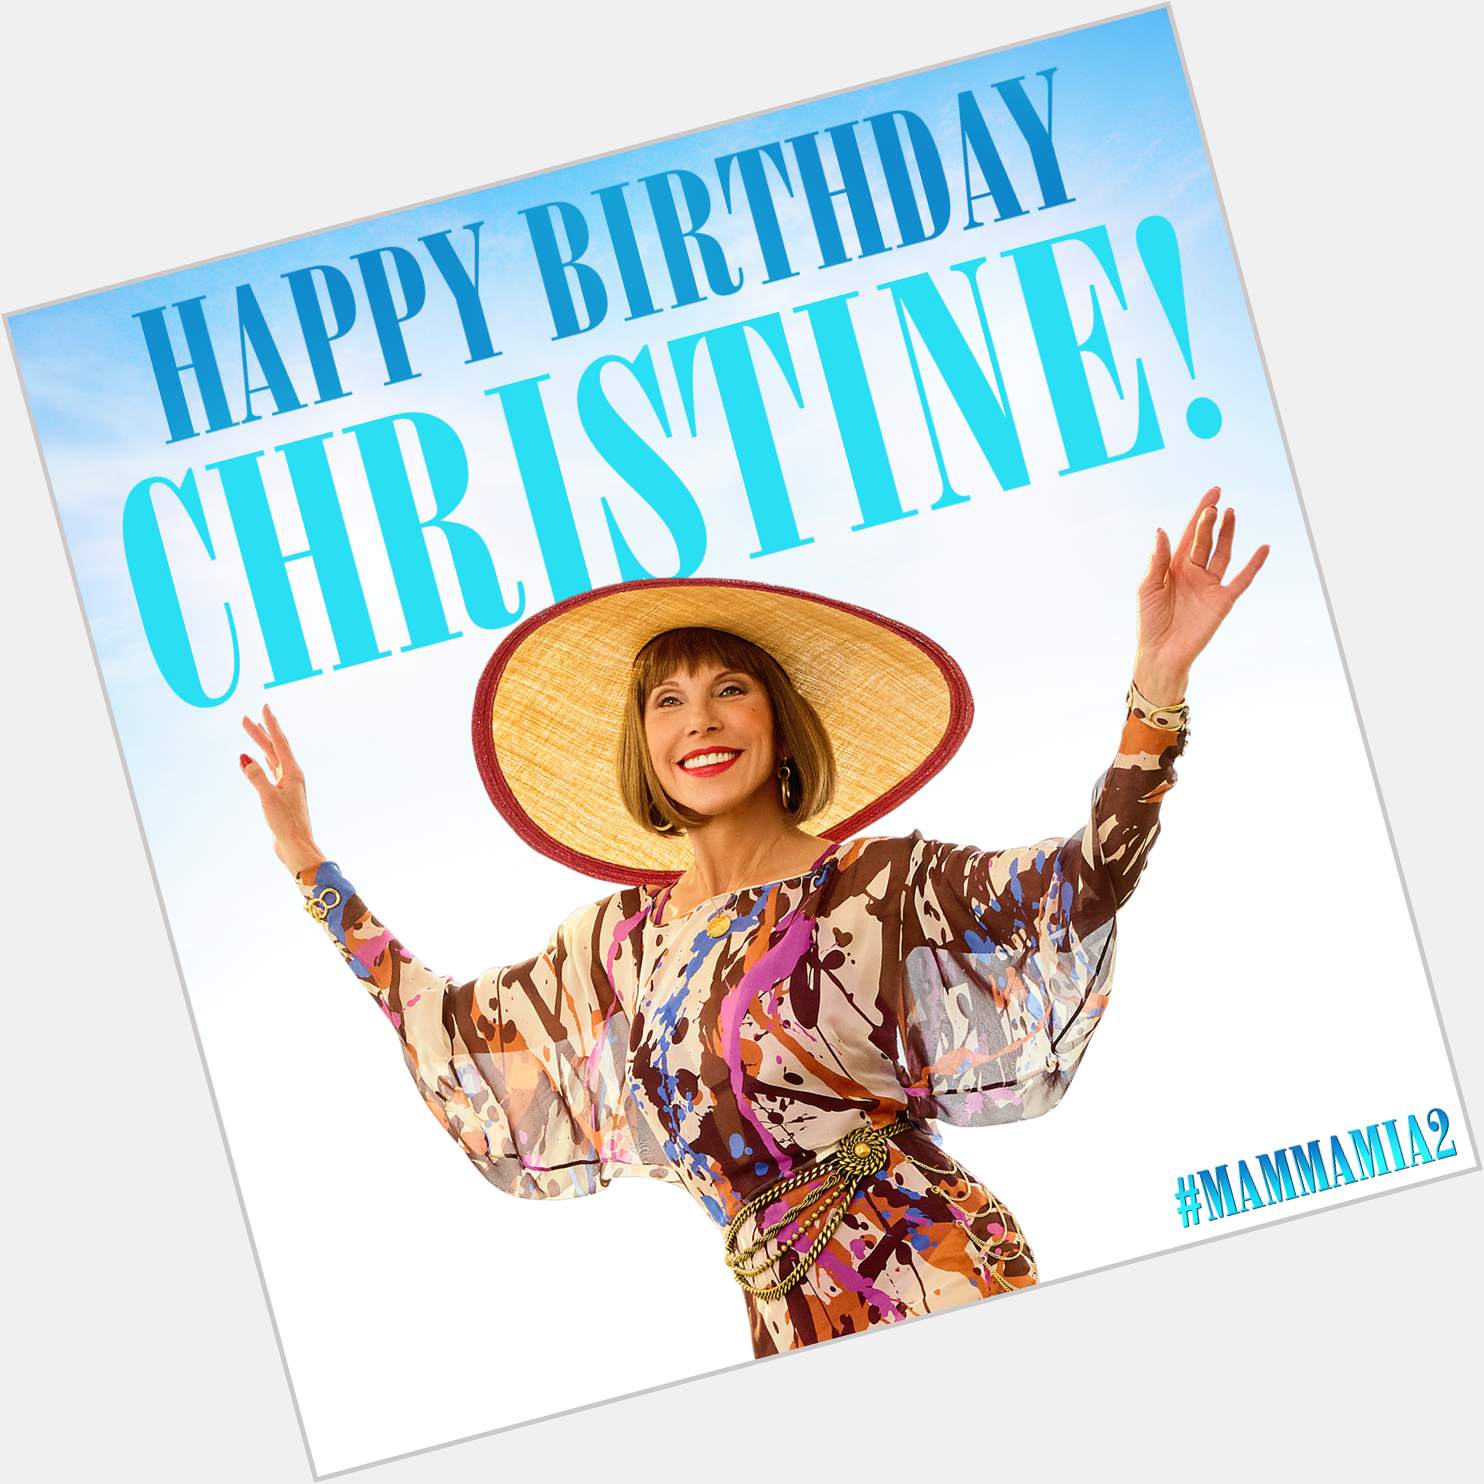 Happy birthday to the fabulous Christine Baranski! 